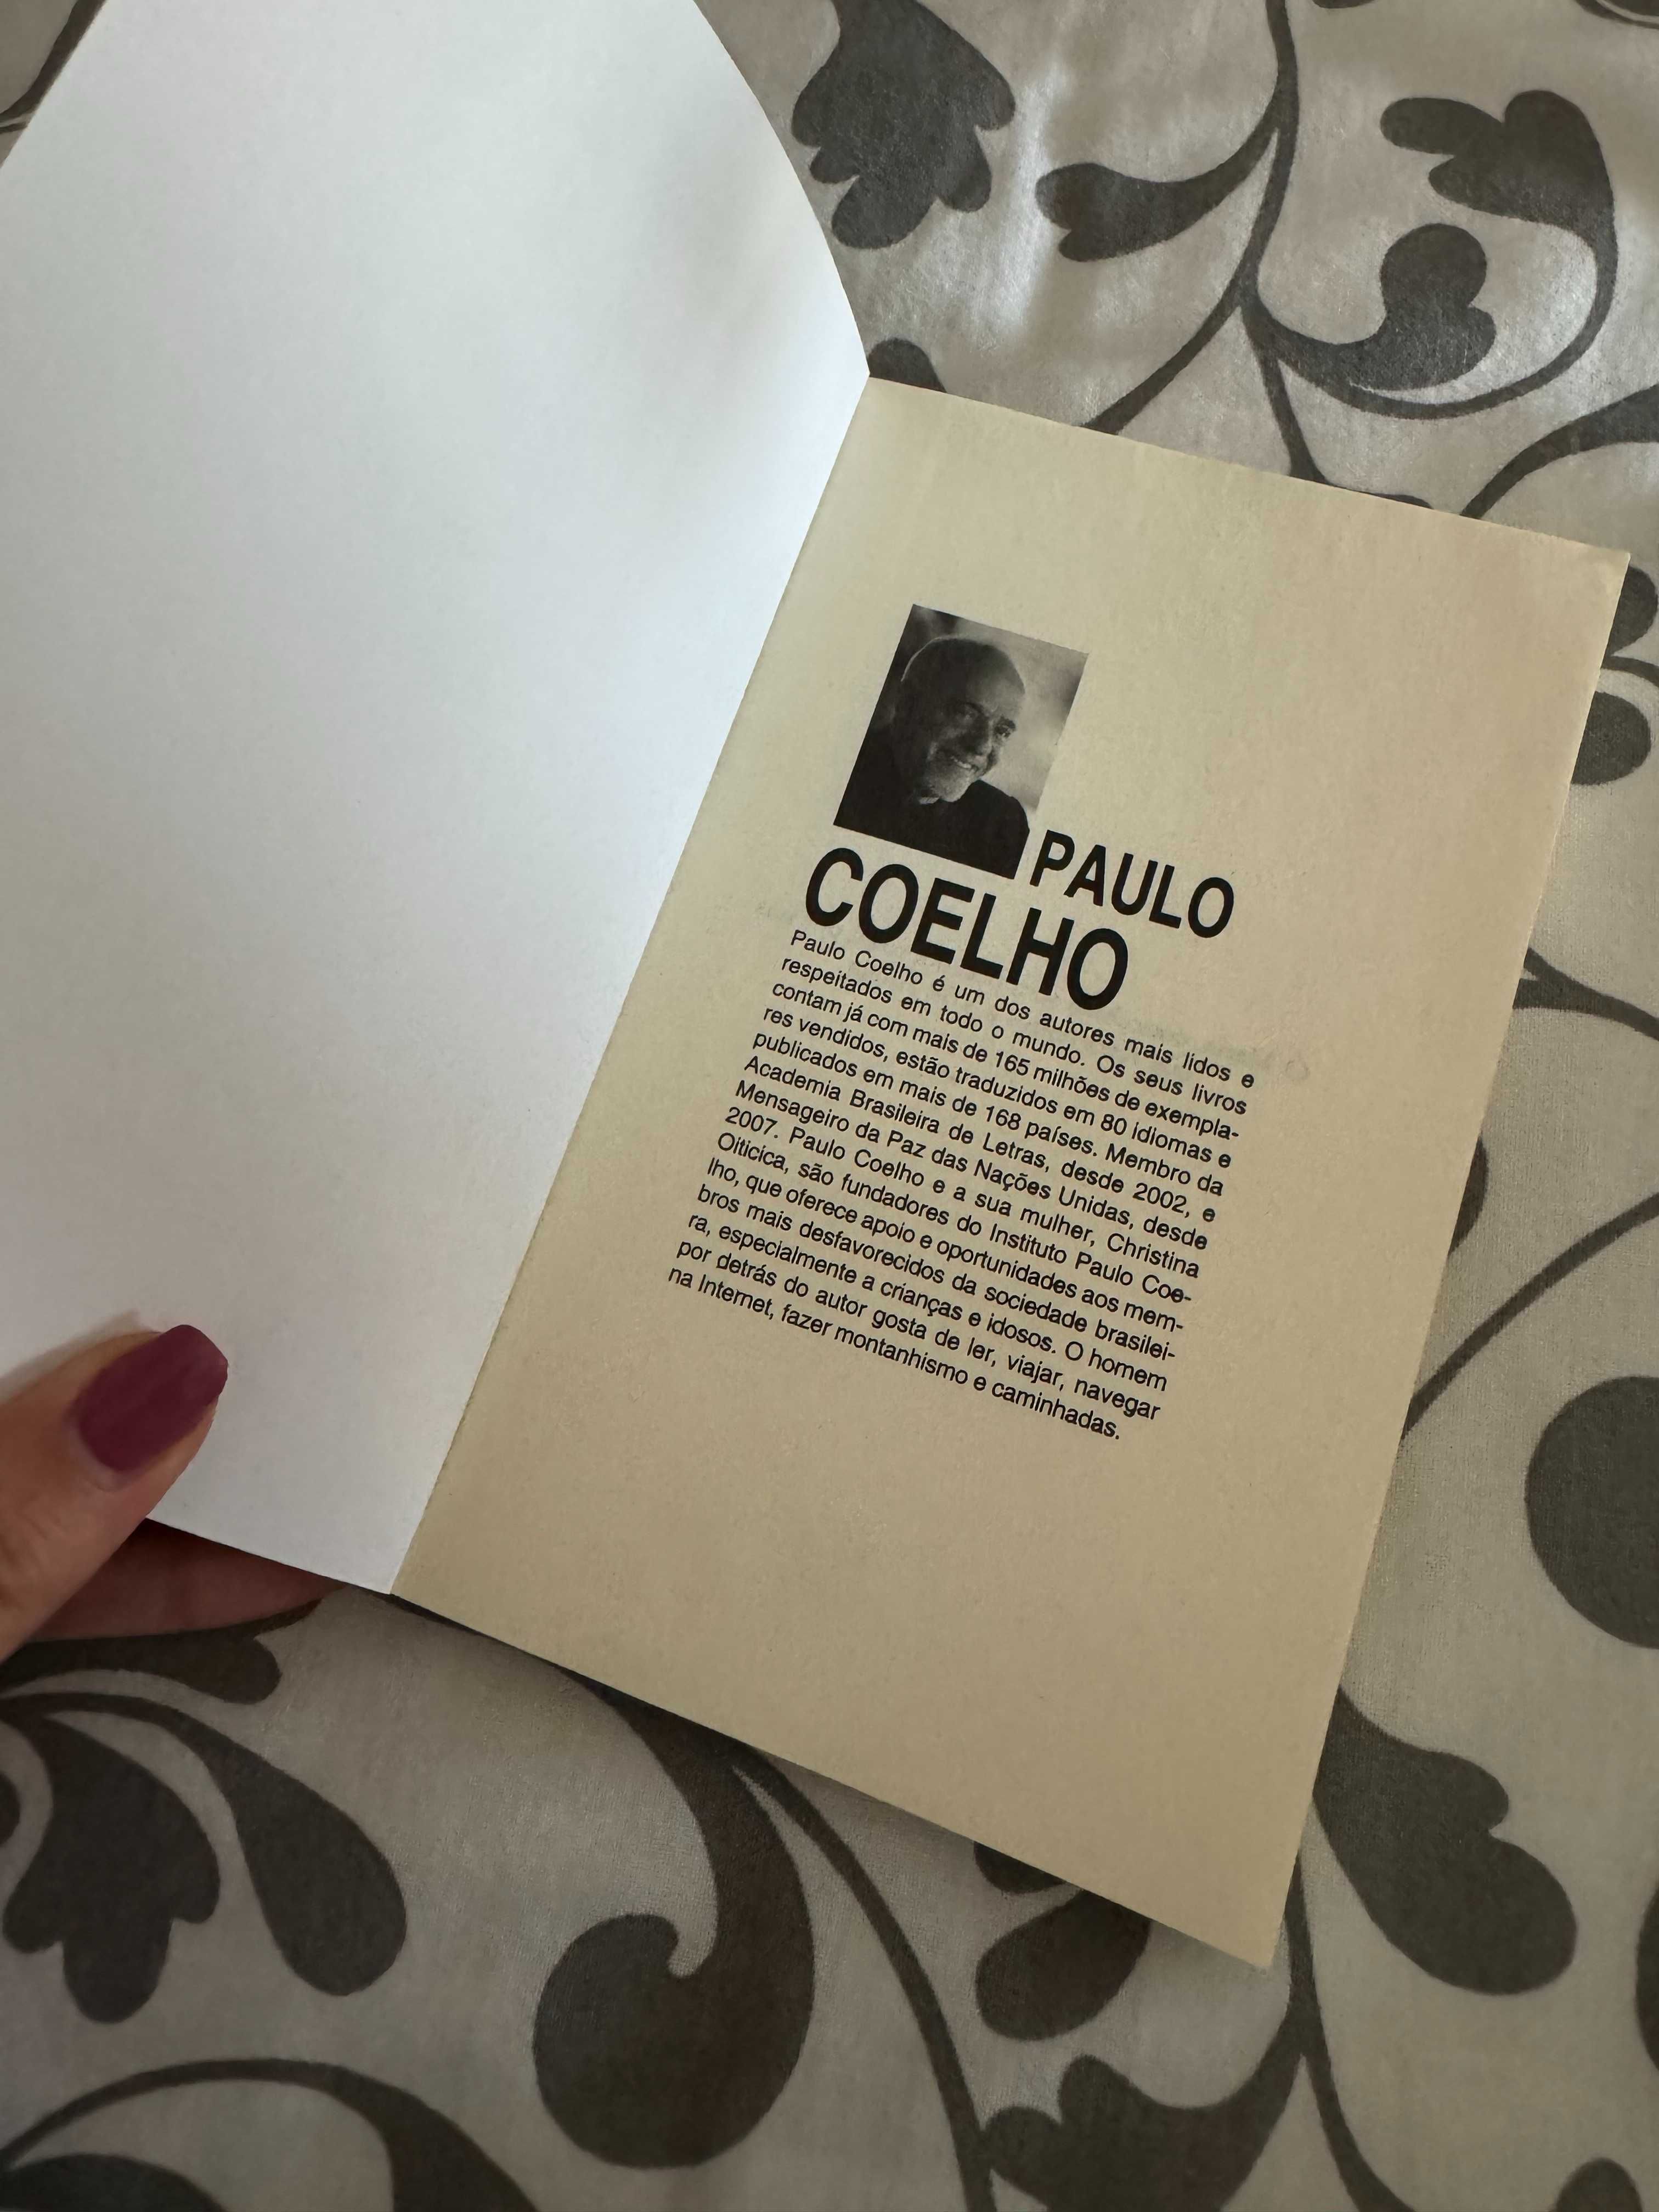 Livro Brida - Paulo Coelho